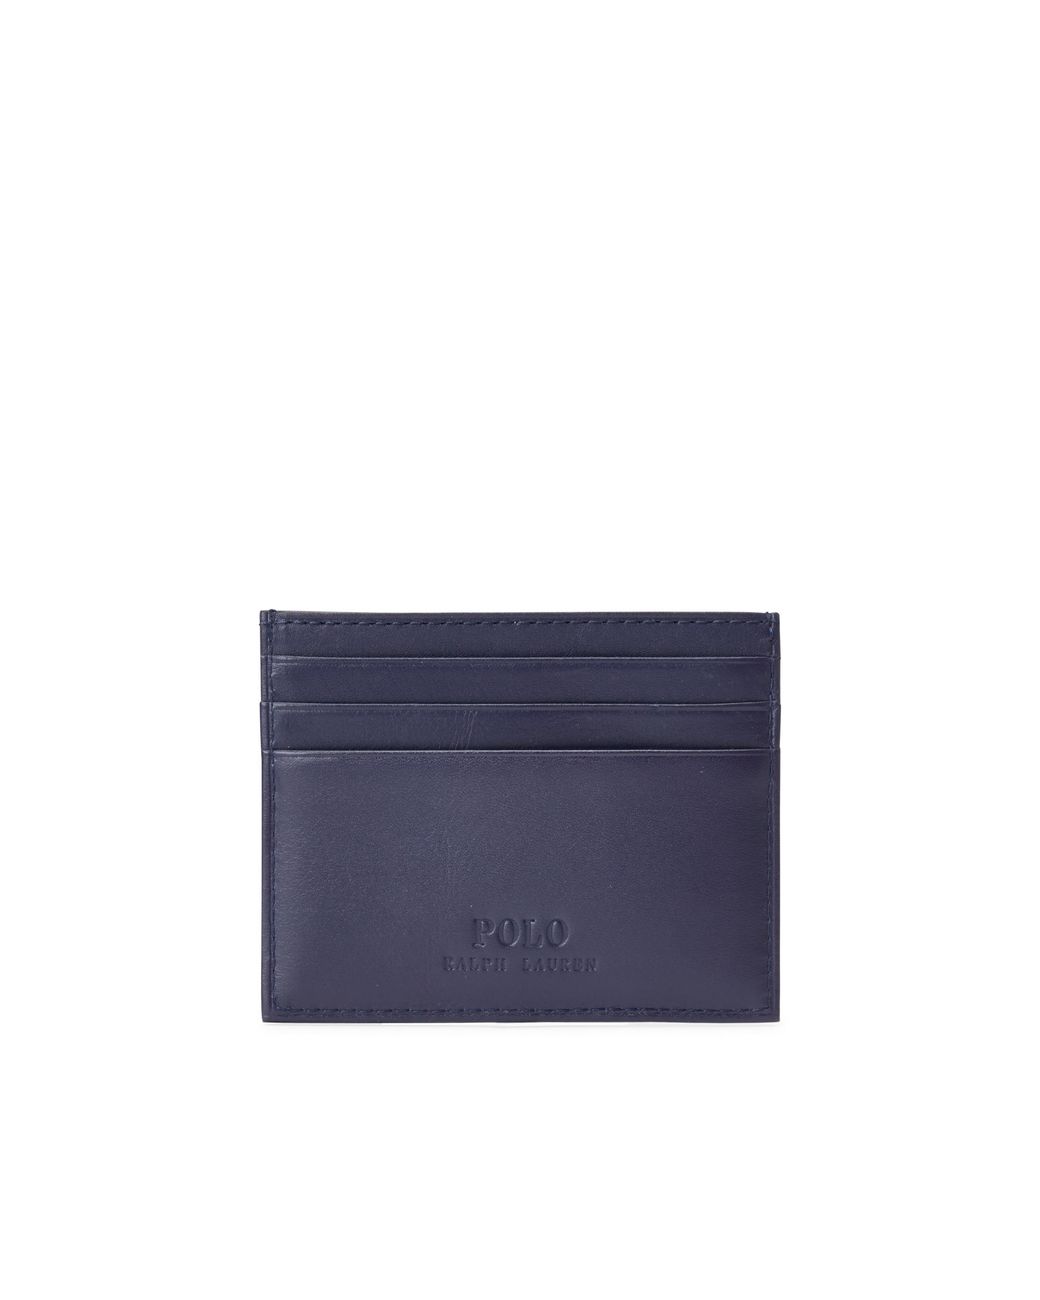 Ralph Lauren Polo Bear Leather Card Case in Blue for Men | Lyst